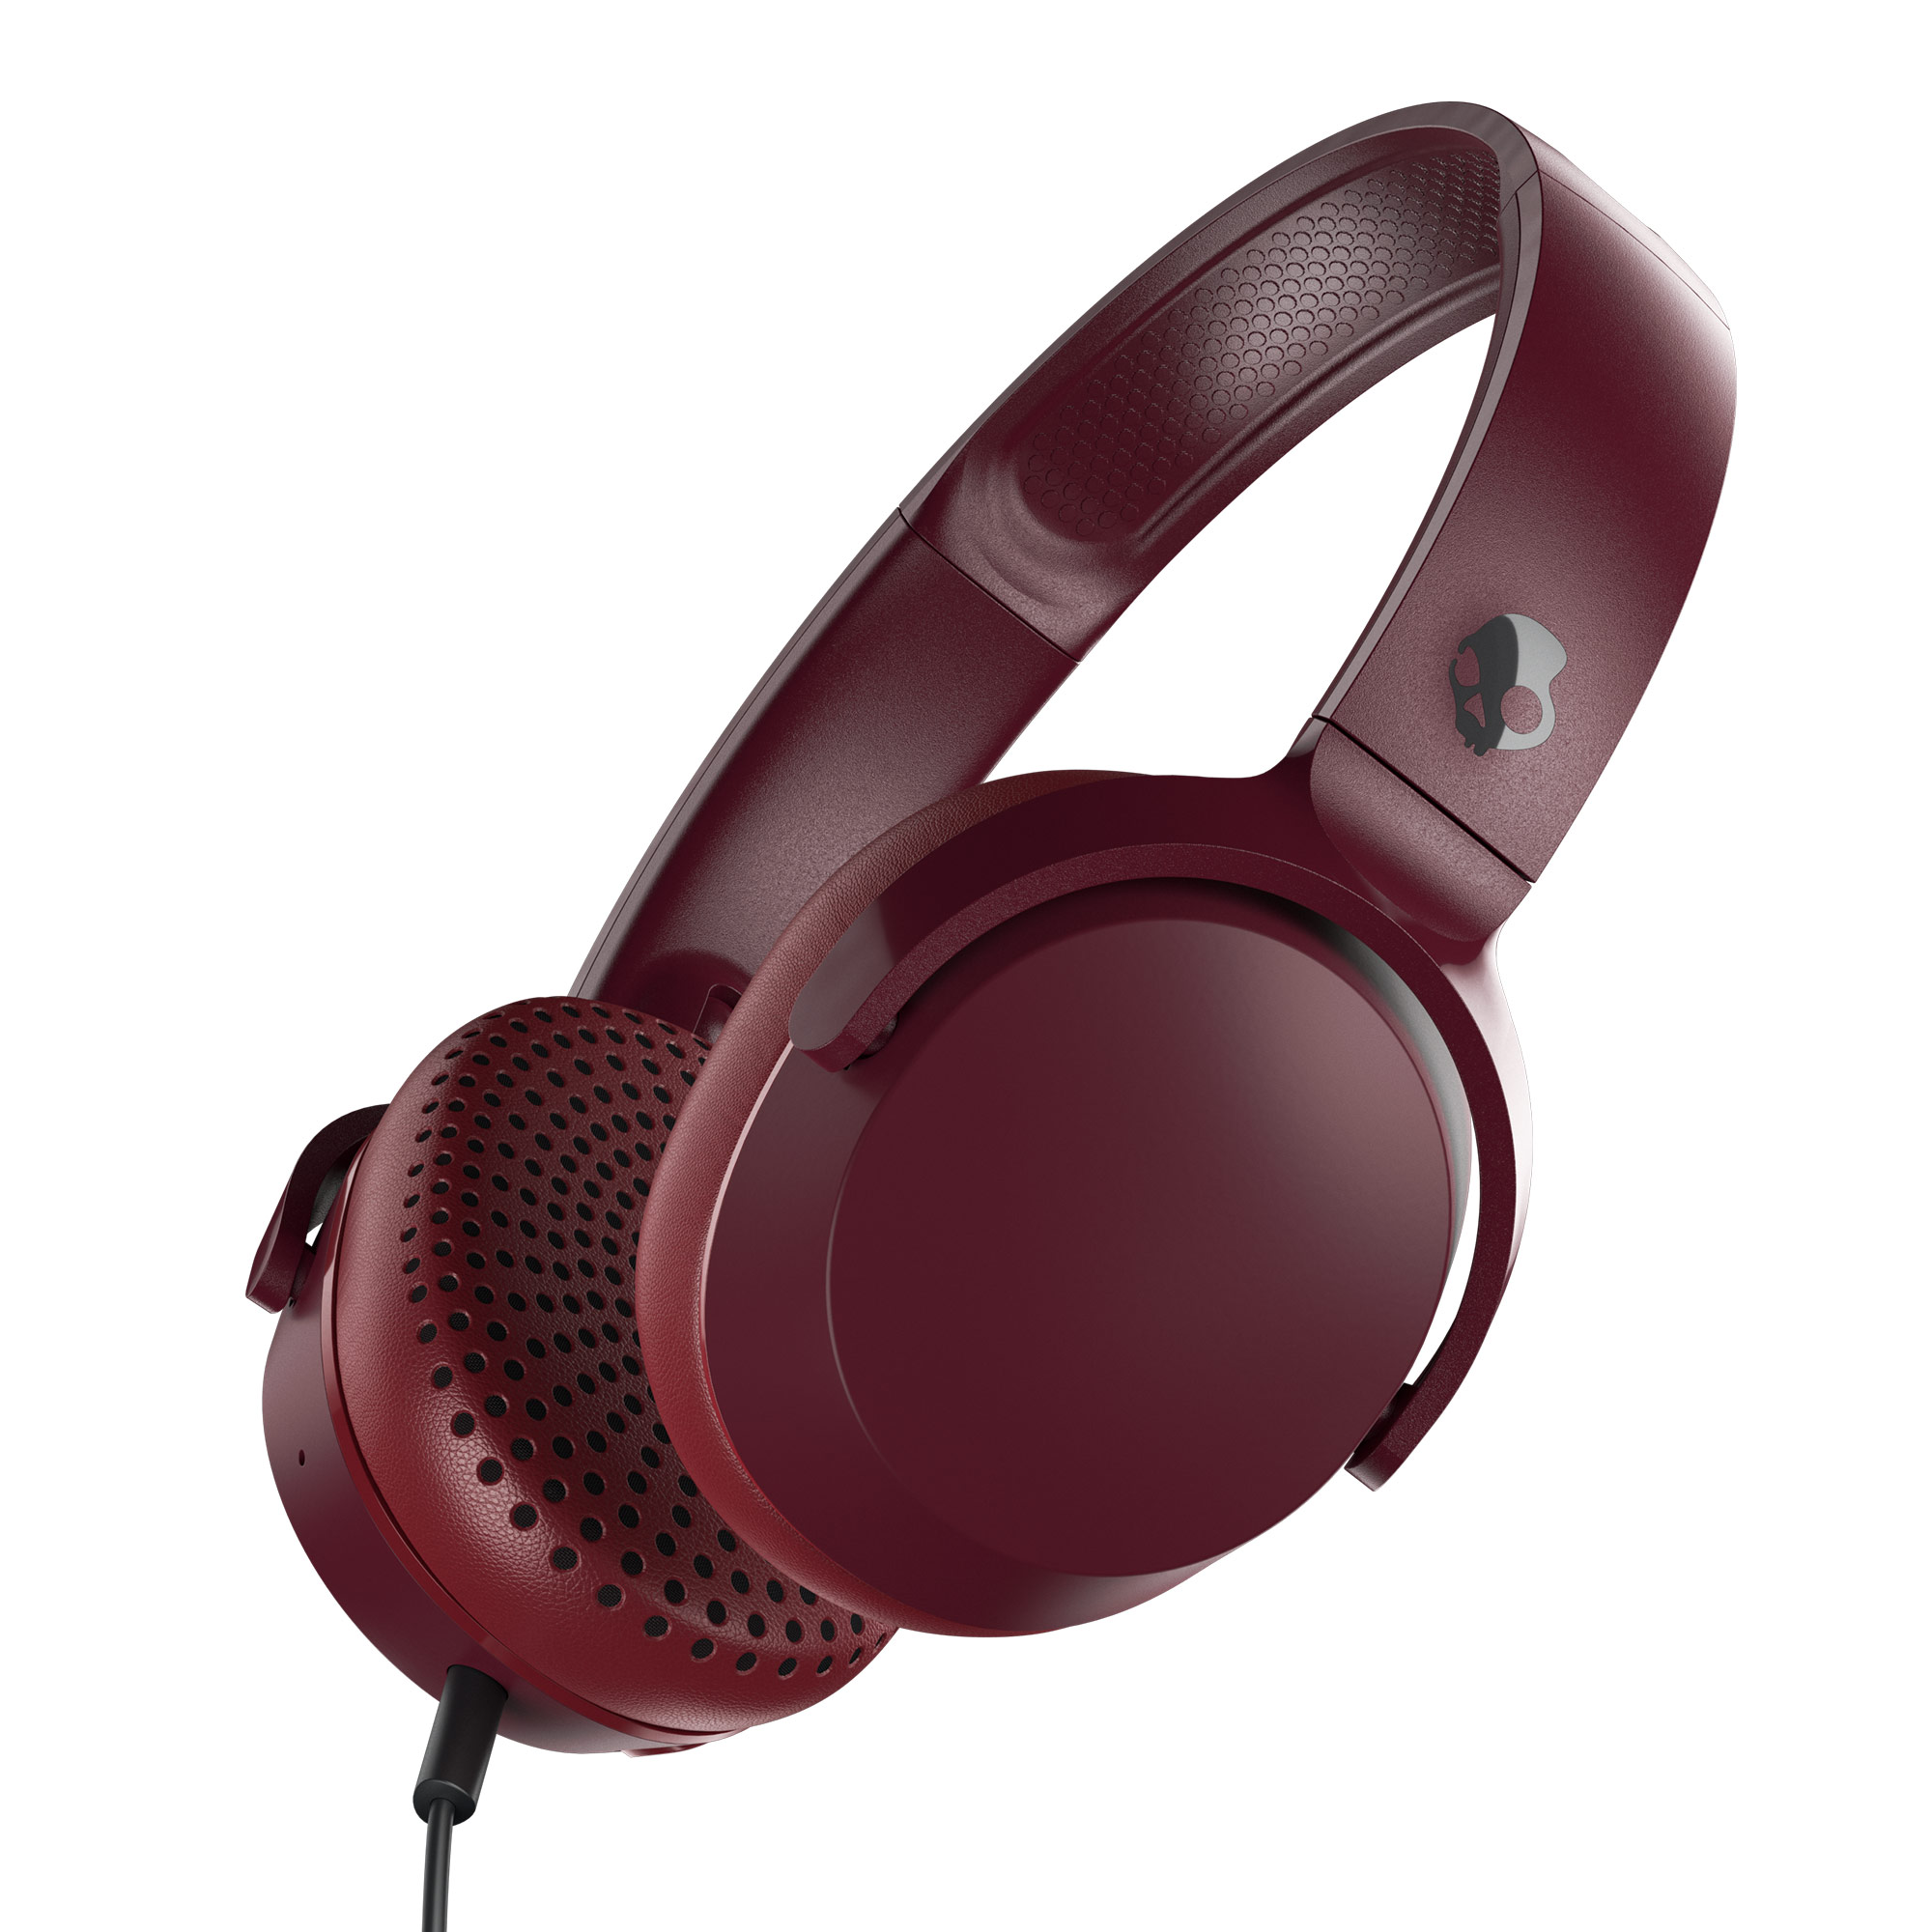 Skullcandy Riff On-Ear Durable Headphone – Deep Red for $19